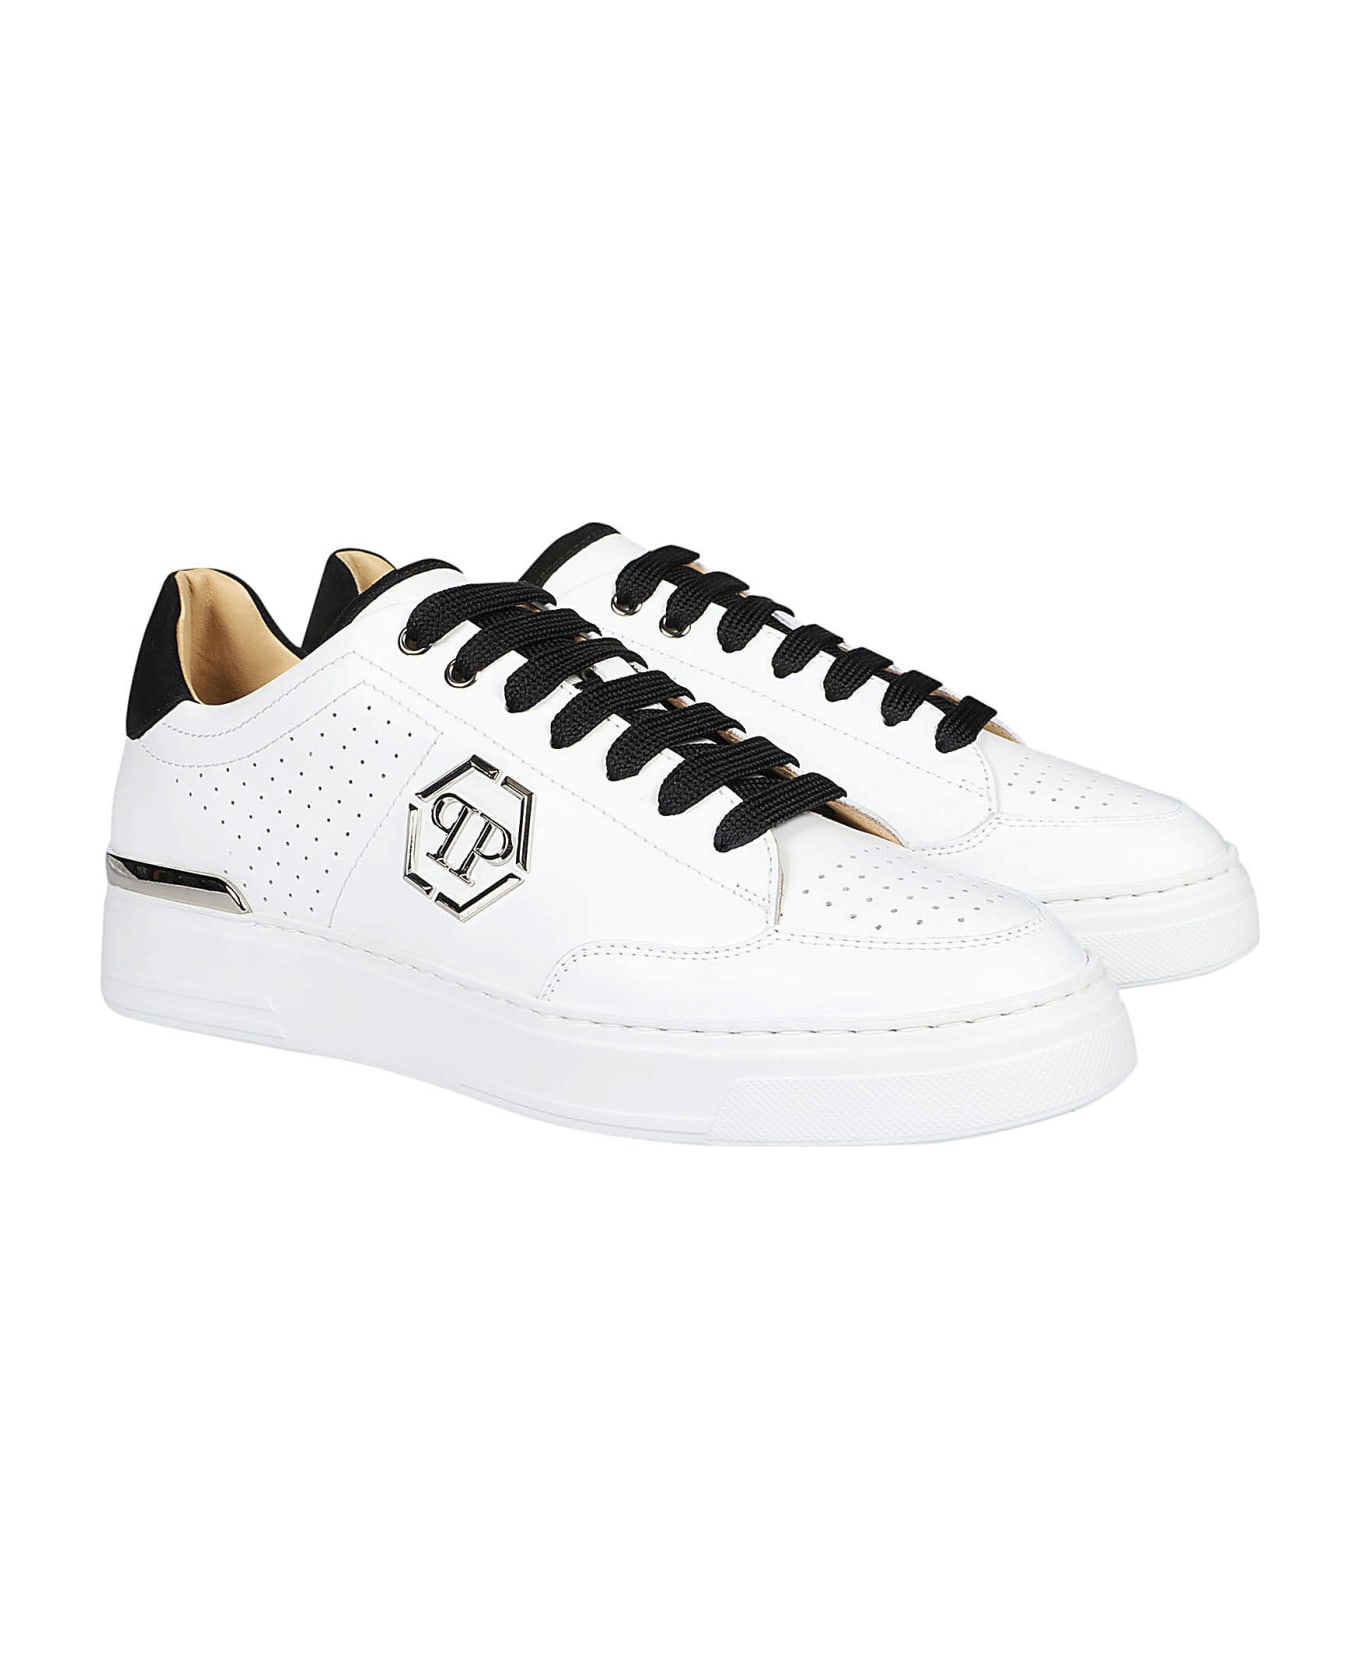 Philipp Plein Low Top Sneakers - White/black スニーカー